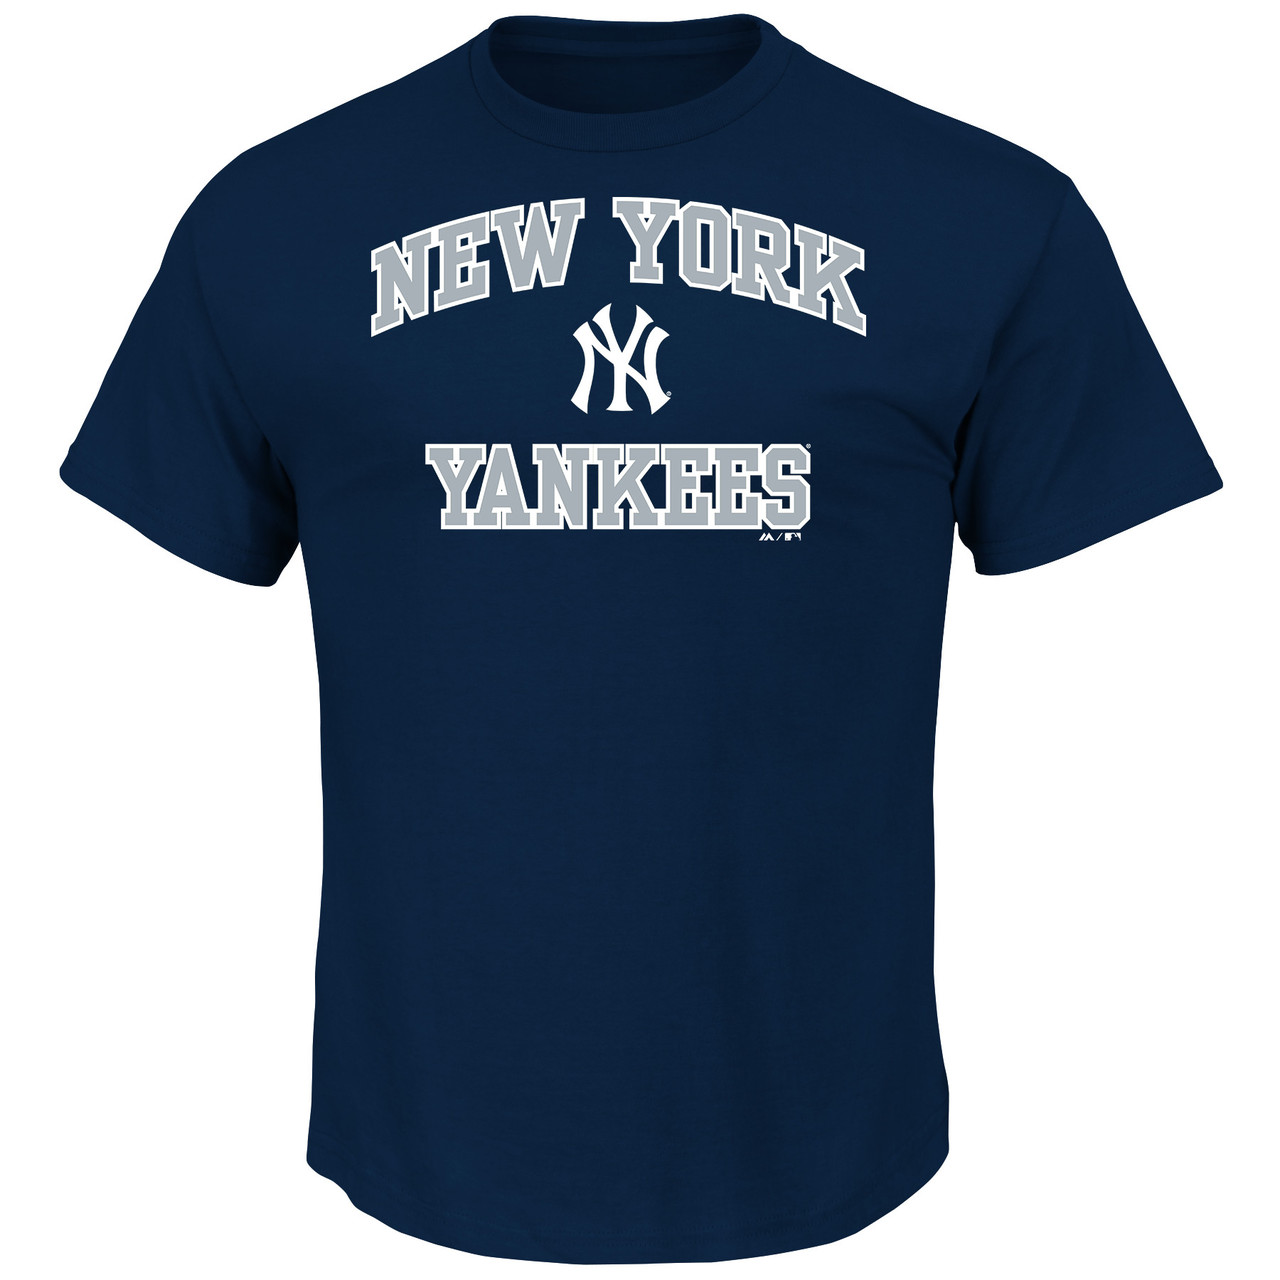 NY Yankees Heart and Soul Adult T-Shirt - Navy